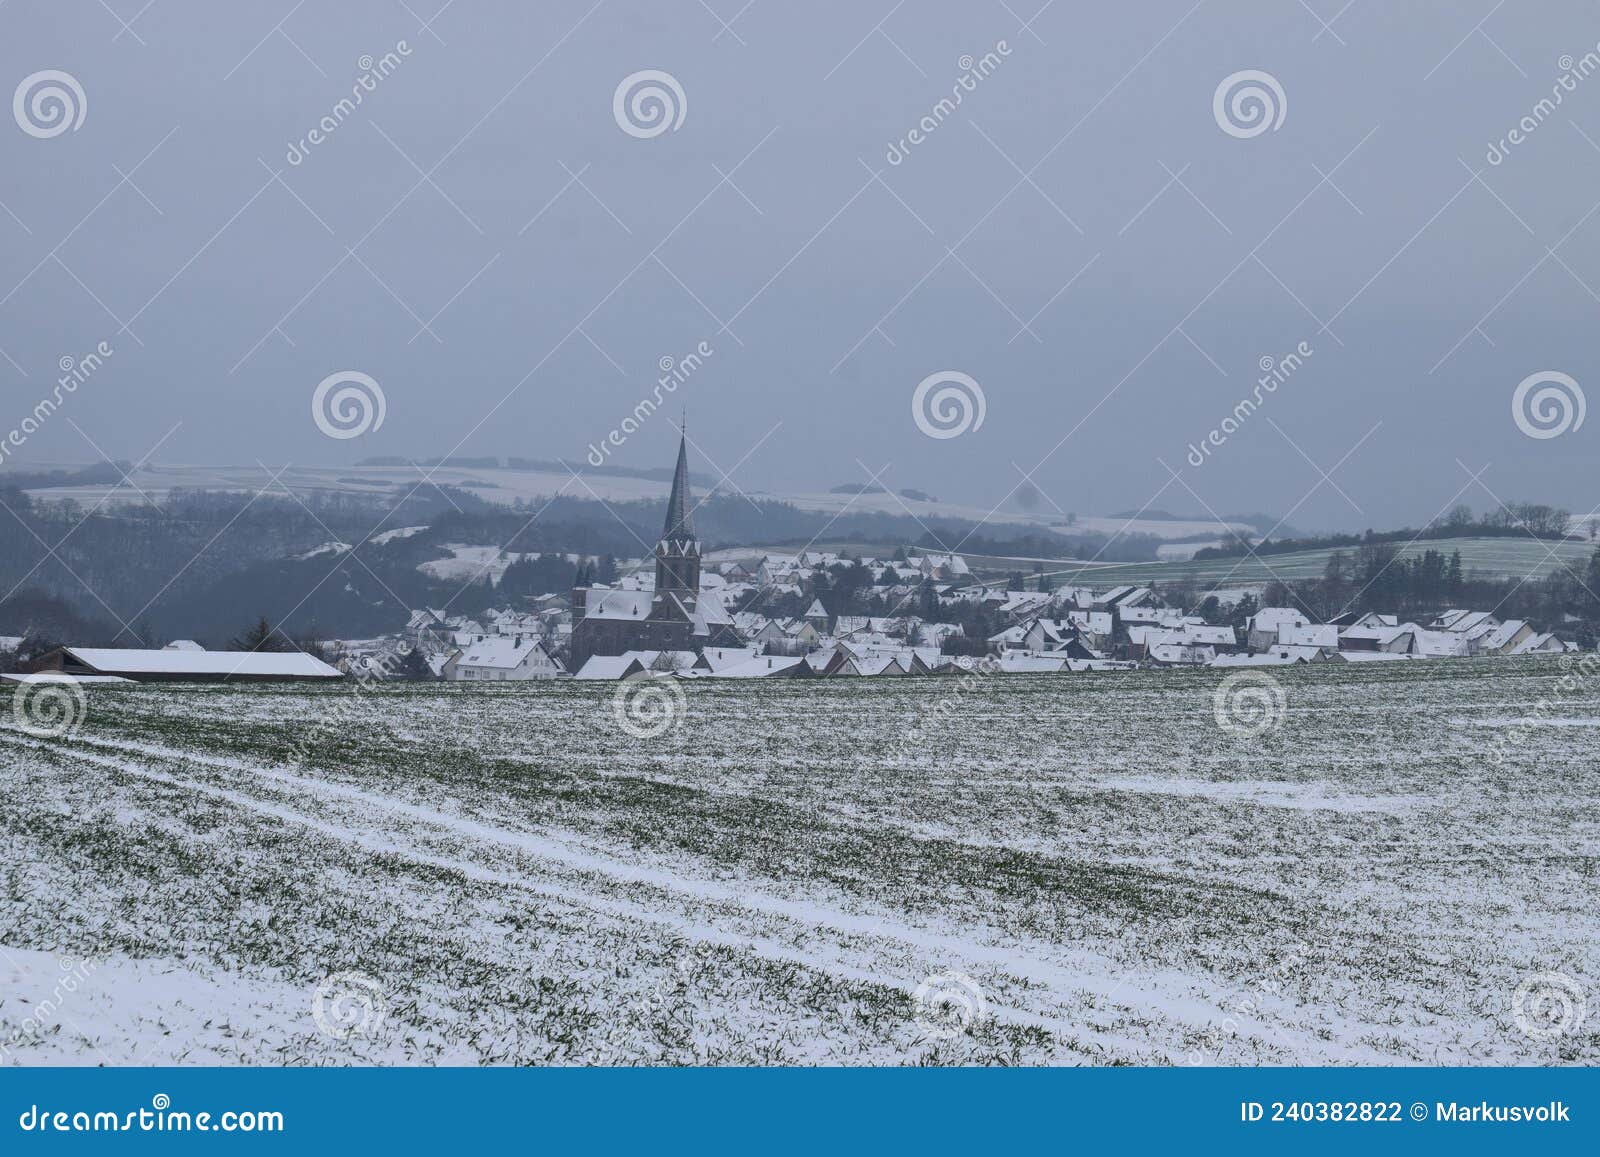 snowy landscape around welling in the eifel